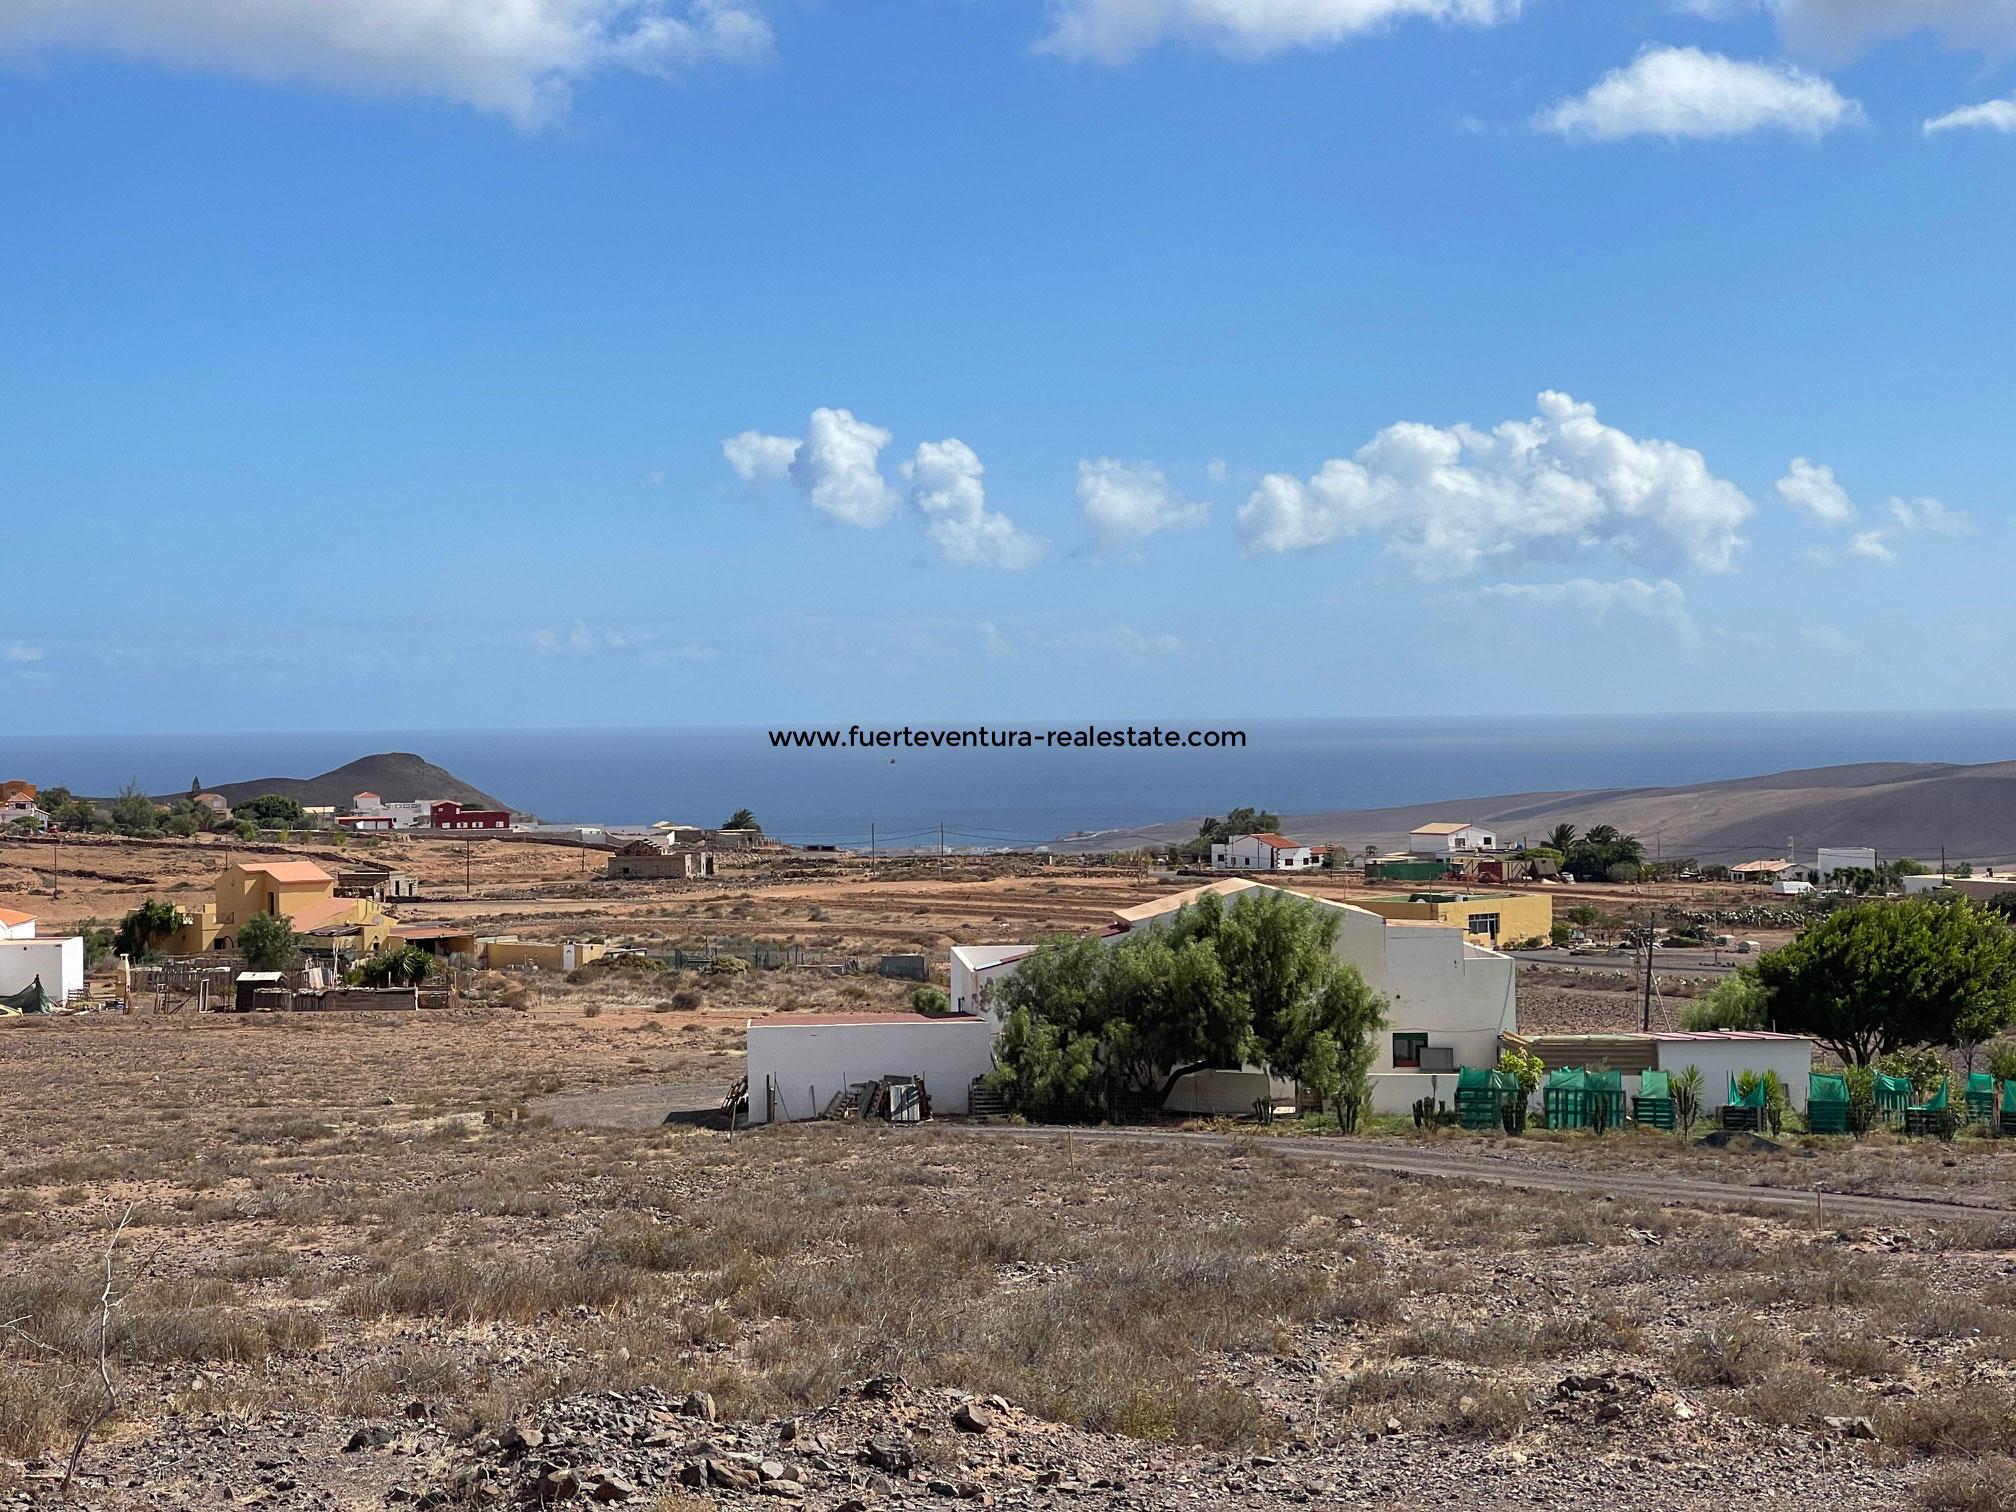  For sale urban plot with sea view at la Asomada